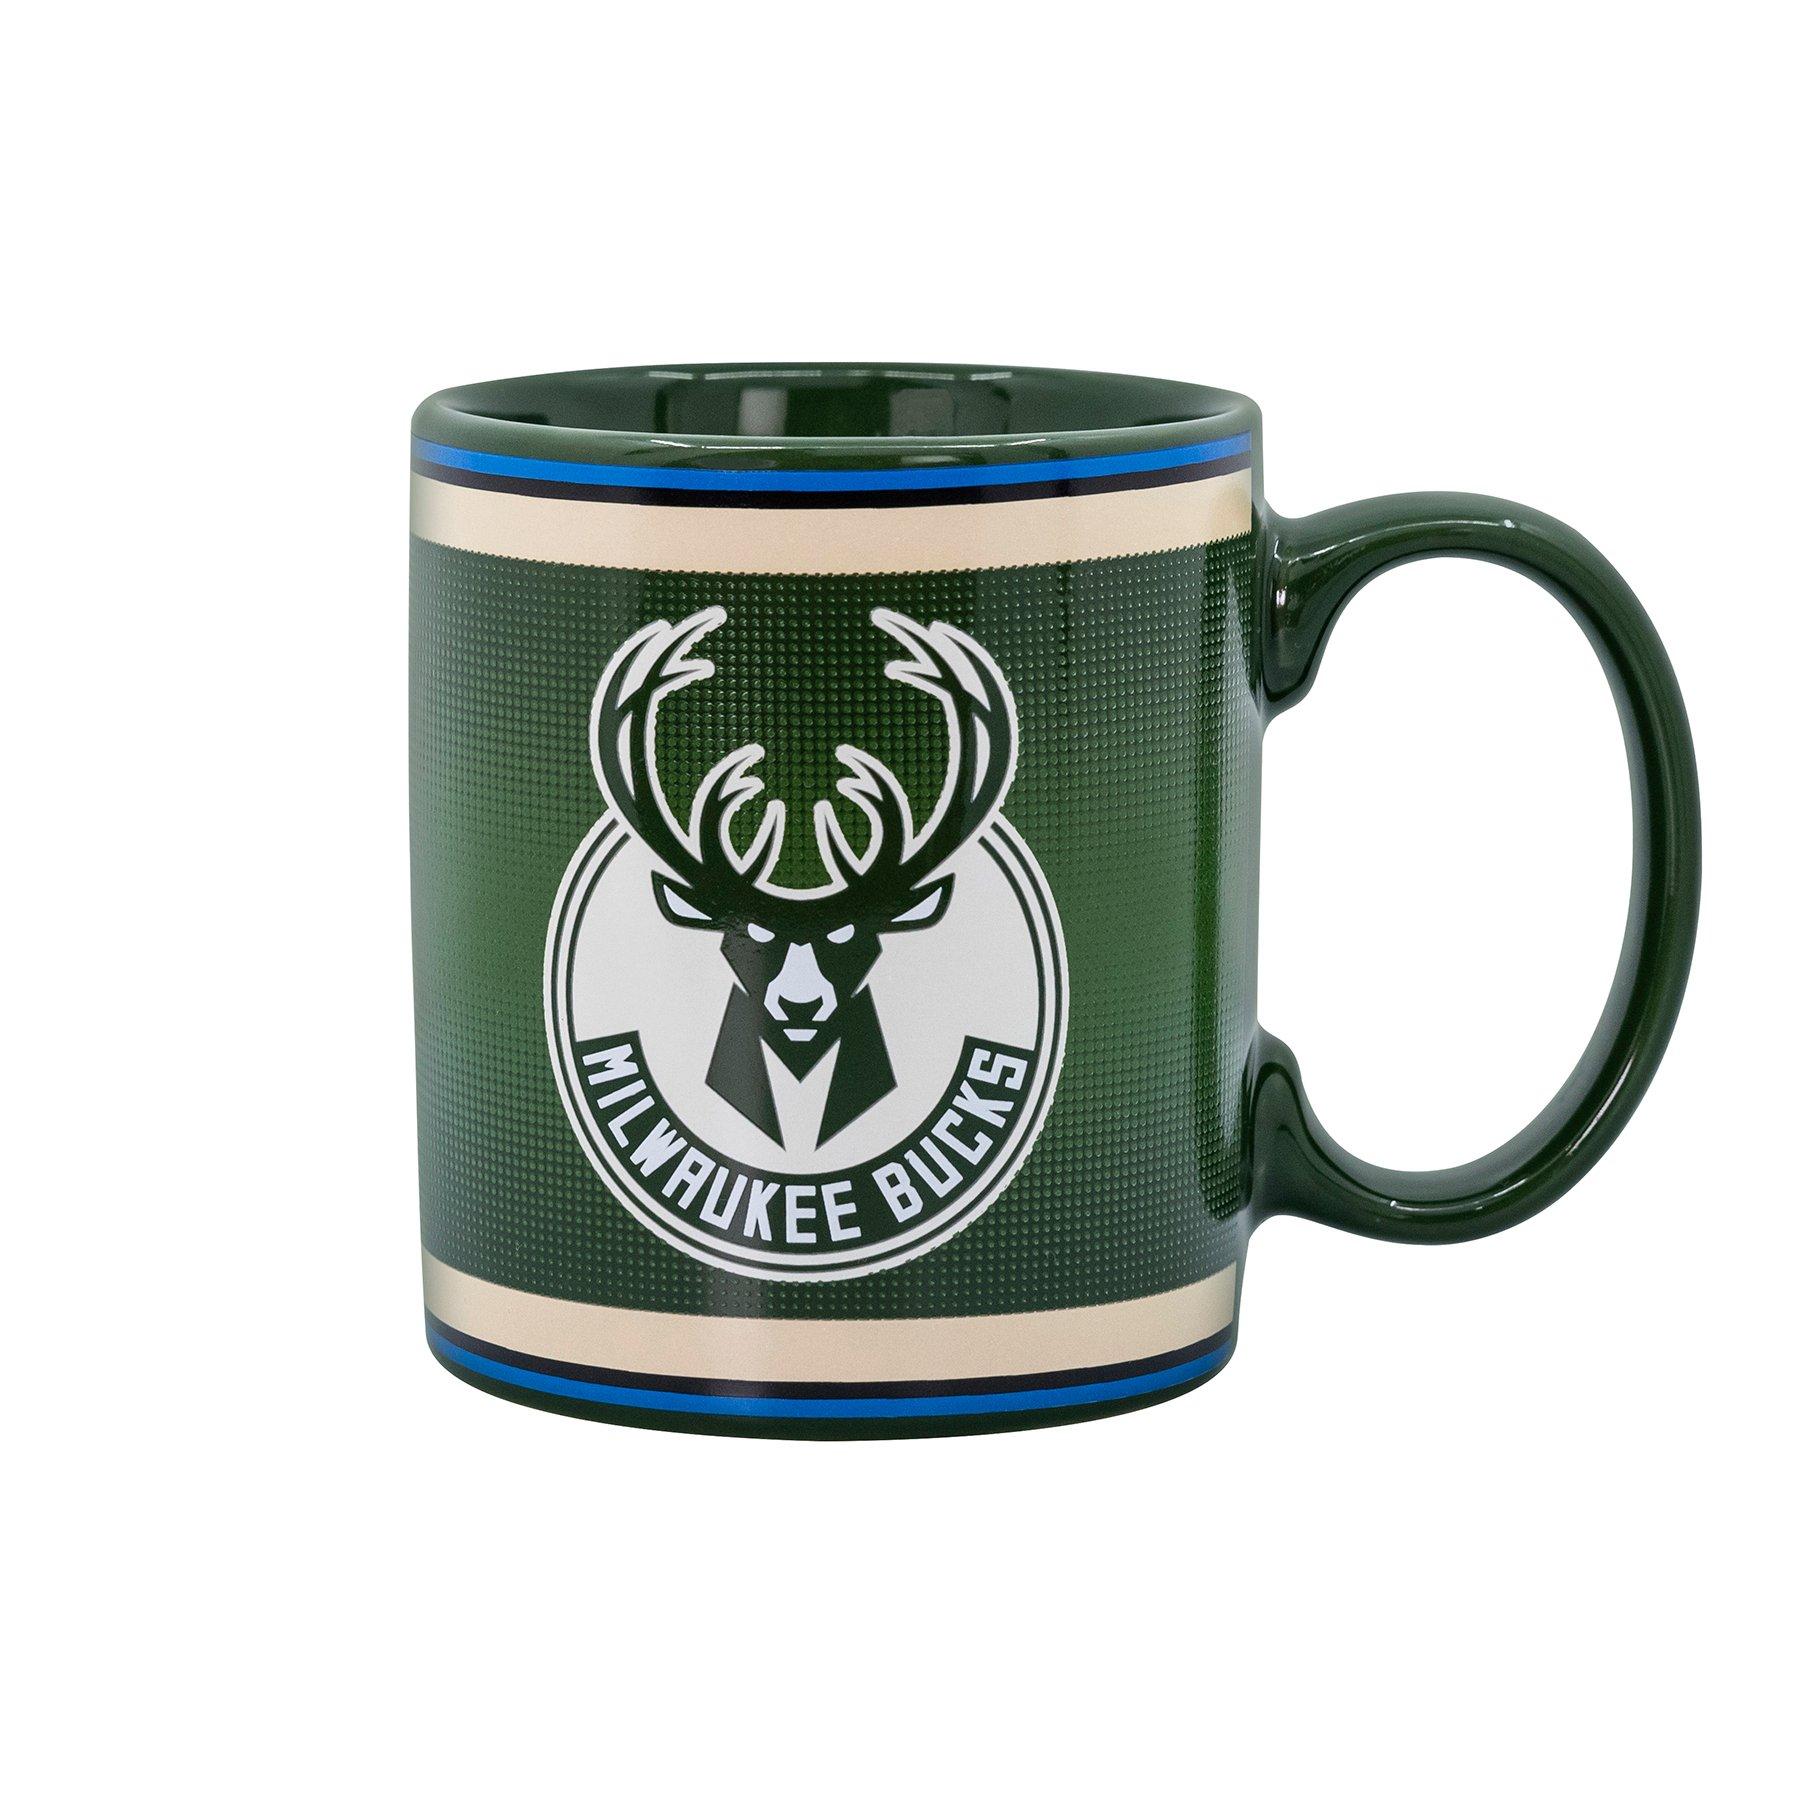 https://media.gamestop.com/i/gamestop/20005672_ALT01/Milwaukee-Bucks-Logo-Mug-Warmer-with-Mug?$pdp$